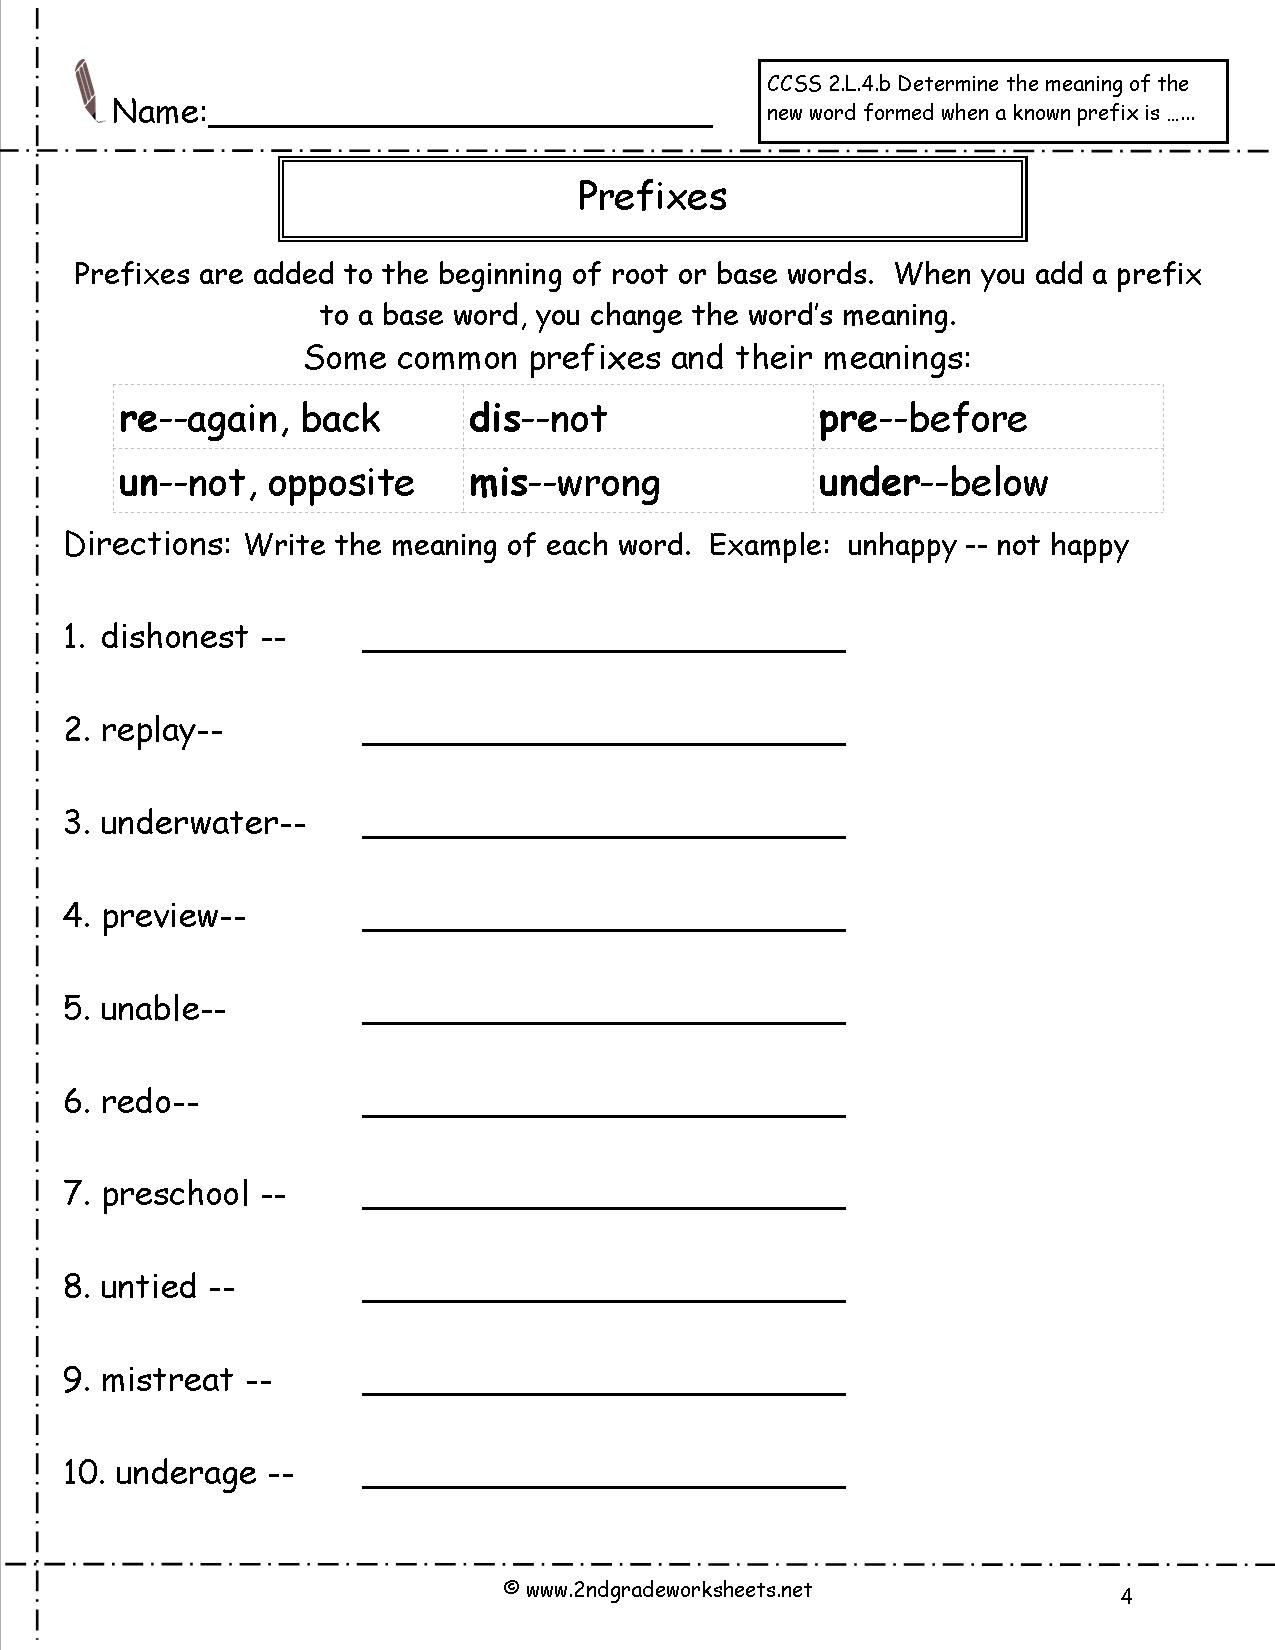 prefix-and-suffix-worksheets-5th-grade-db-excel